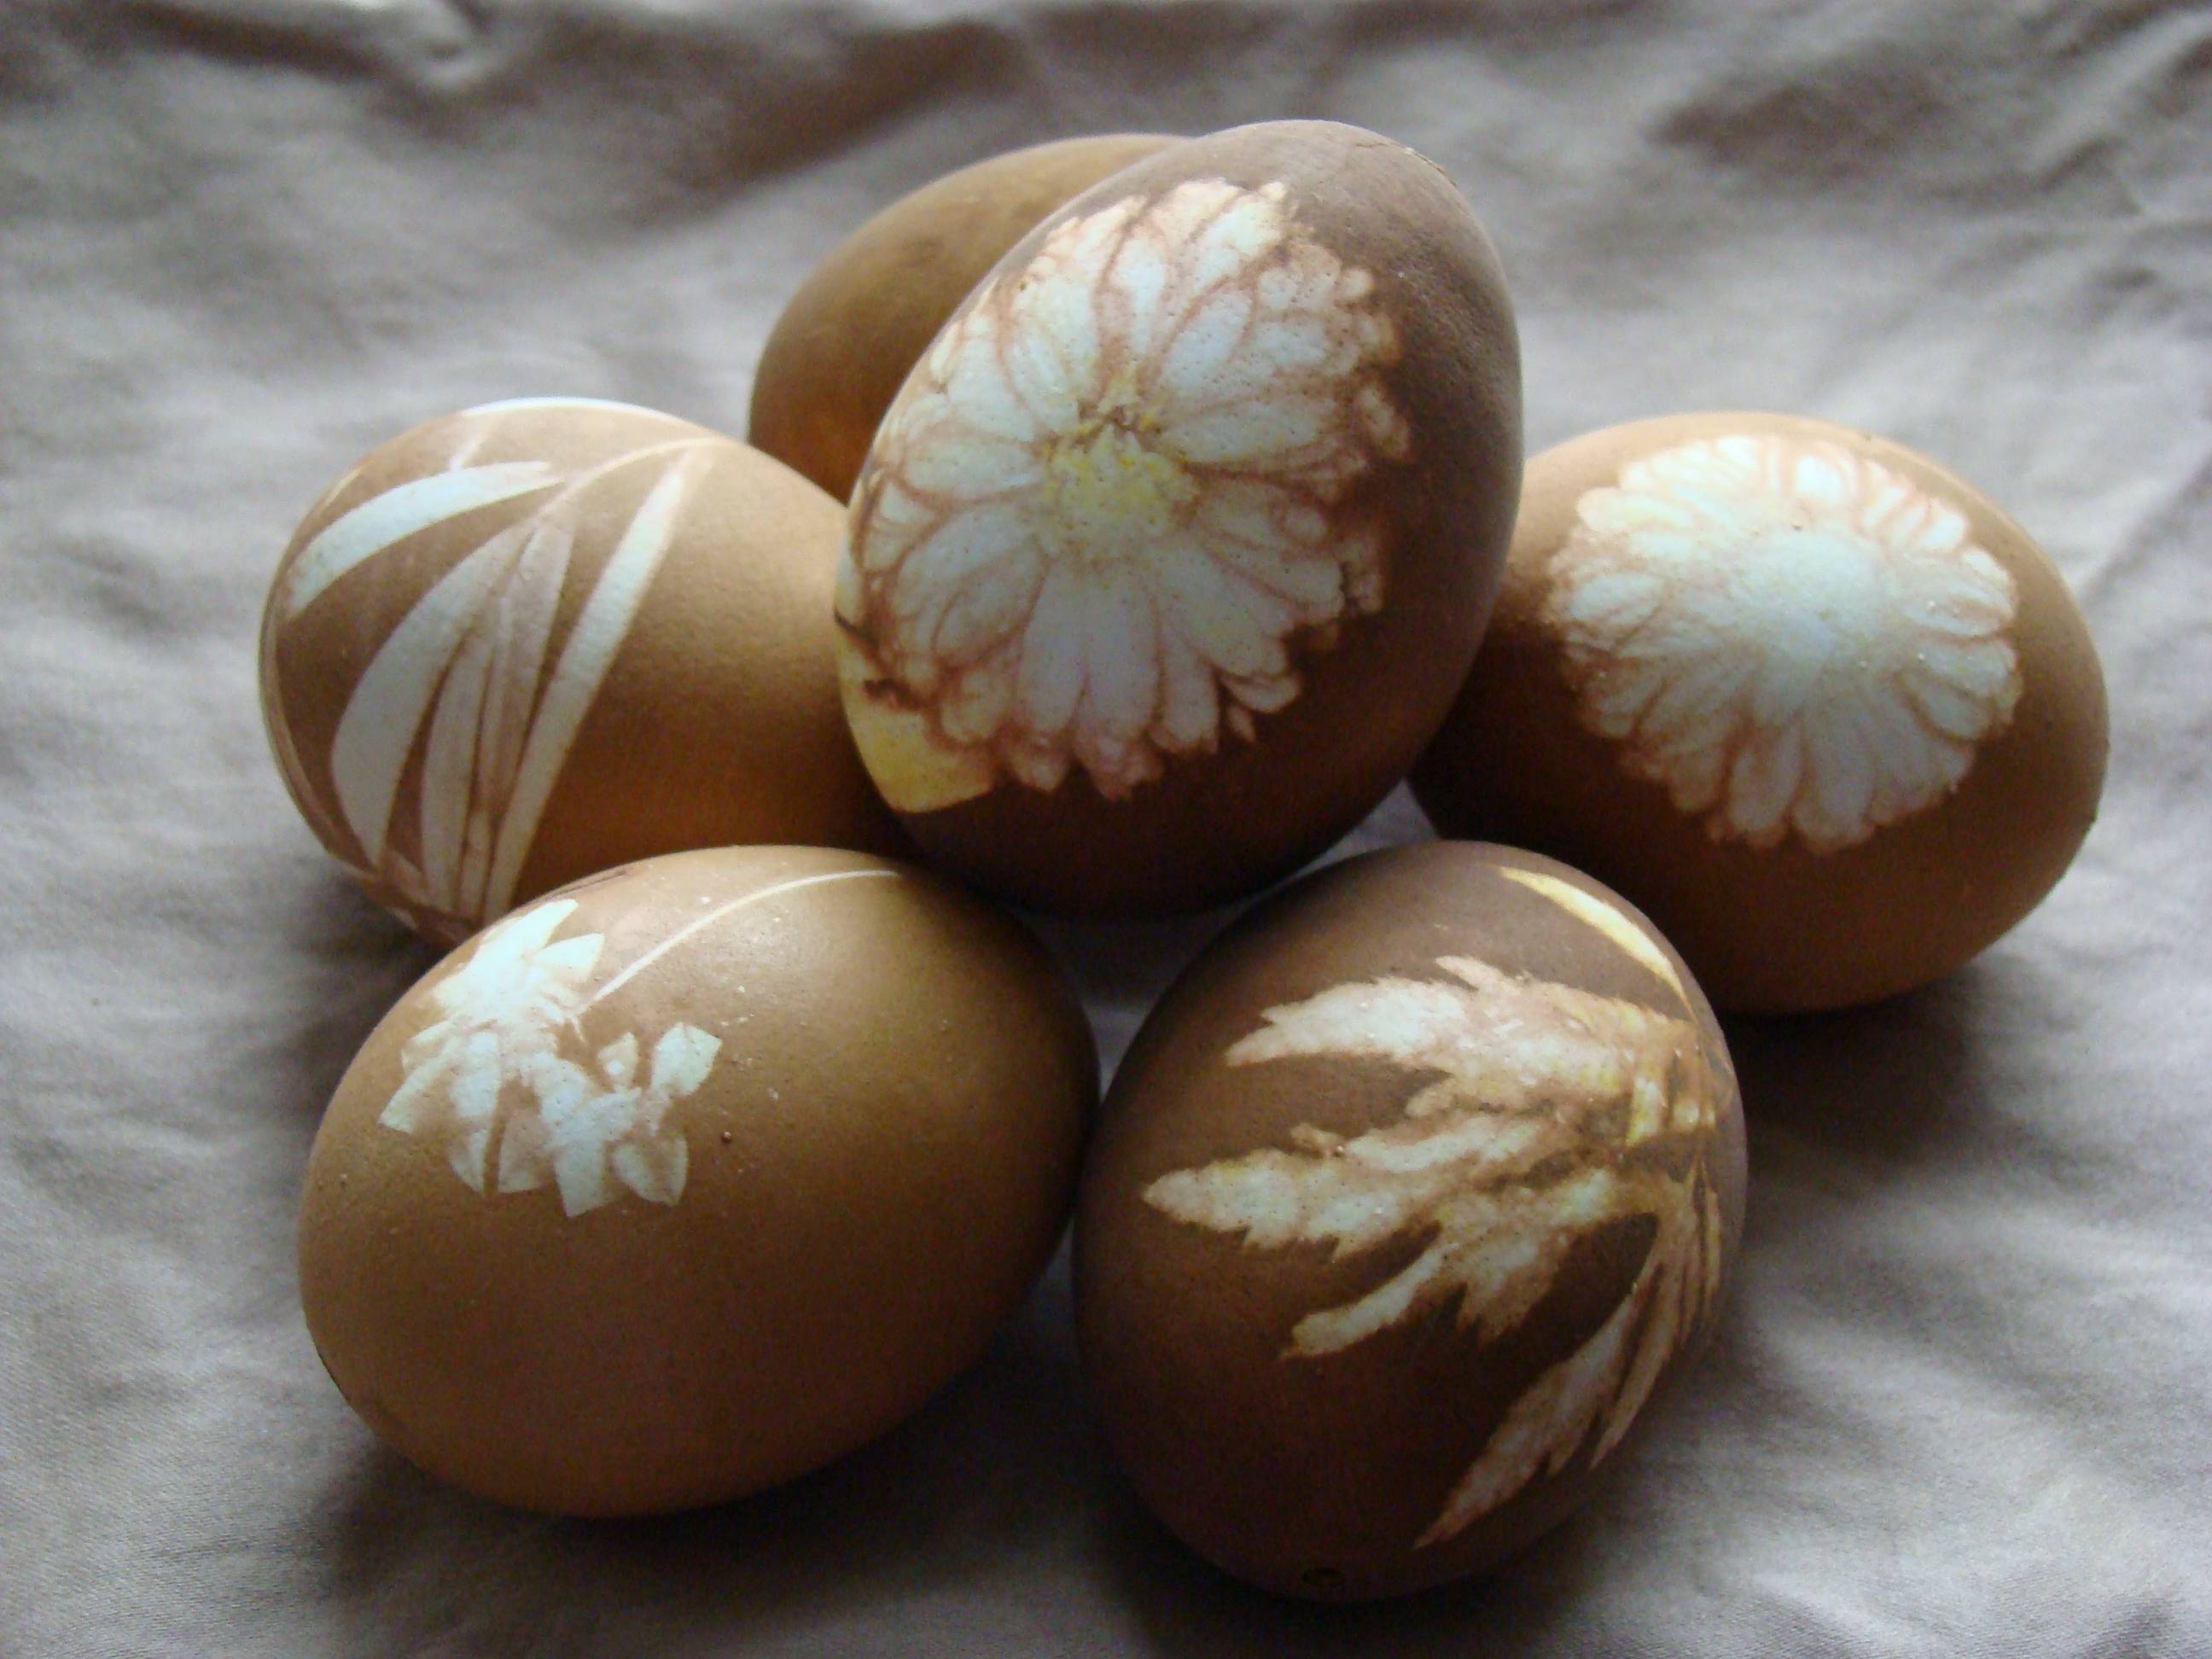 Как красиво покрасить яйца на пасху своими руками в домашних условиях?